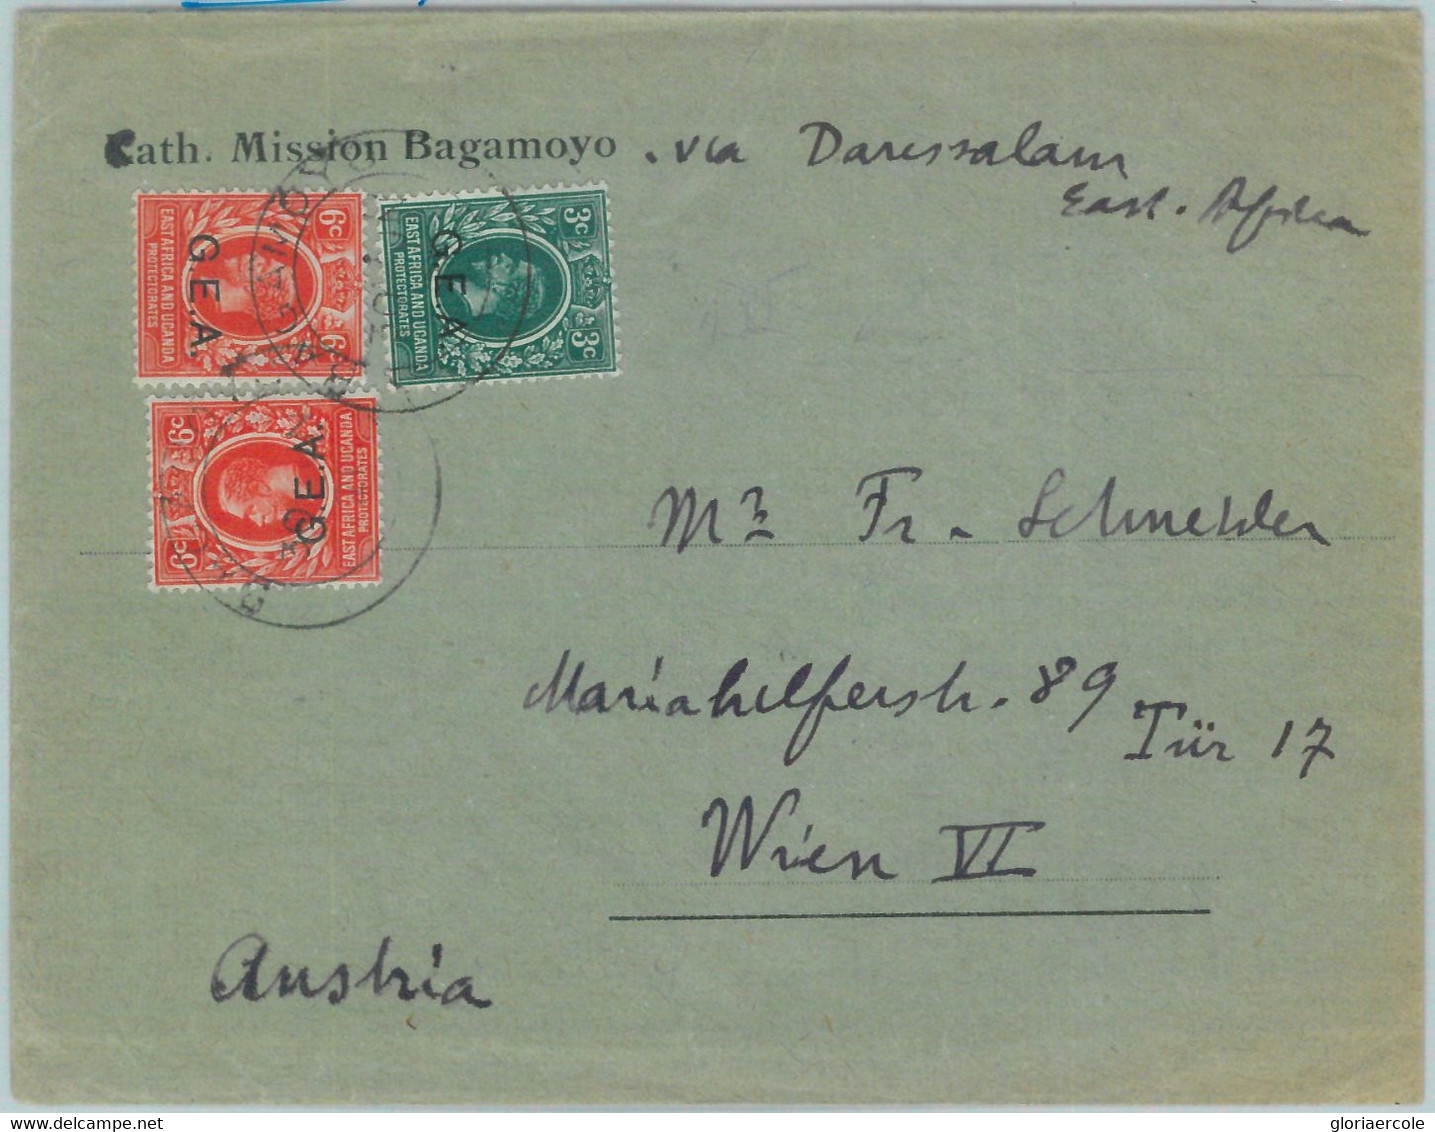 89215 - TANGANYIKA  - POSTAL HISTORY - G.E.A. Overprinted Stamps On COVER 1921 - Tanganyika (...-1932)